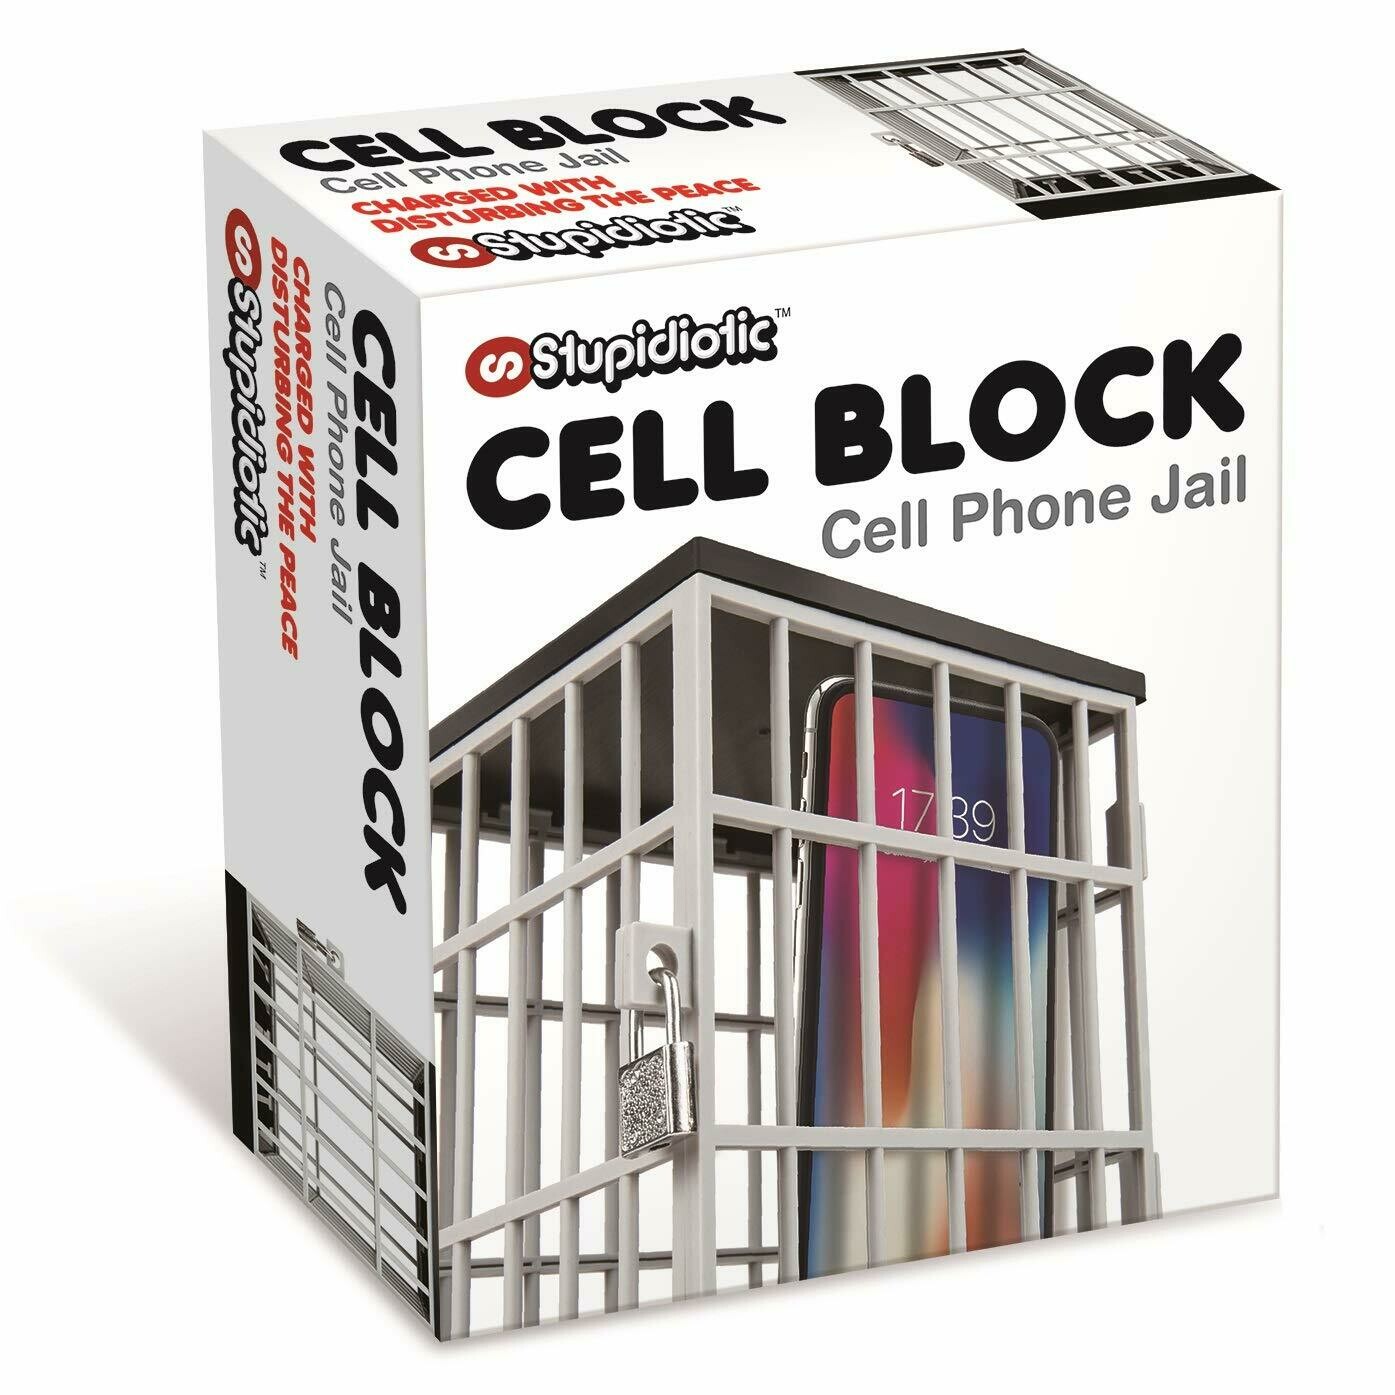 Cell Block Phone Jail